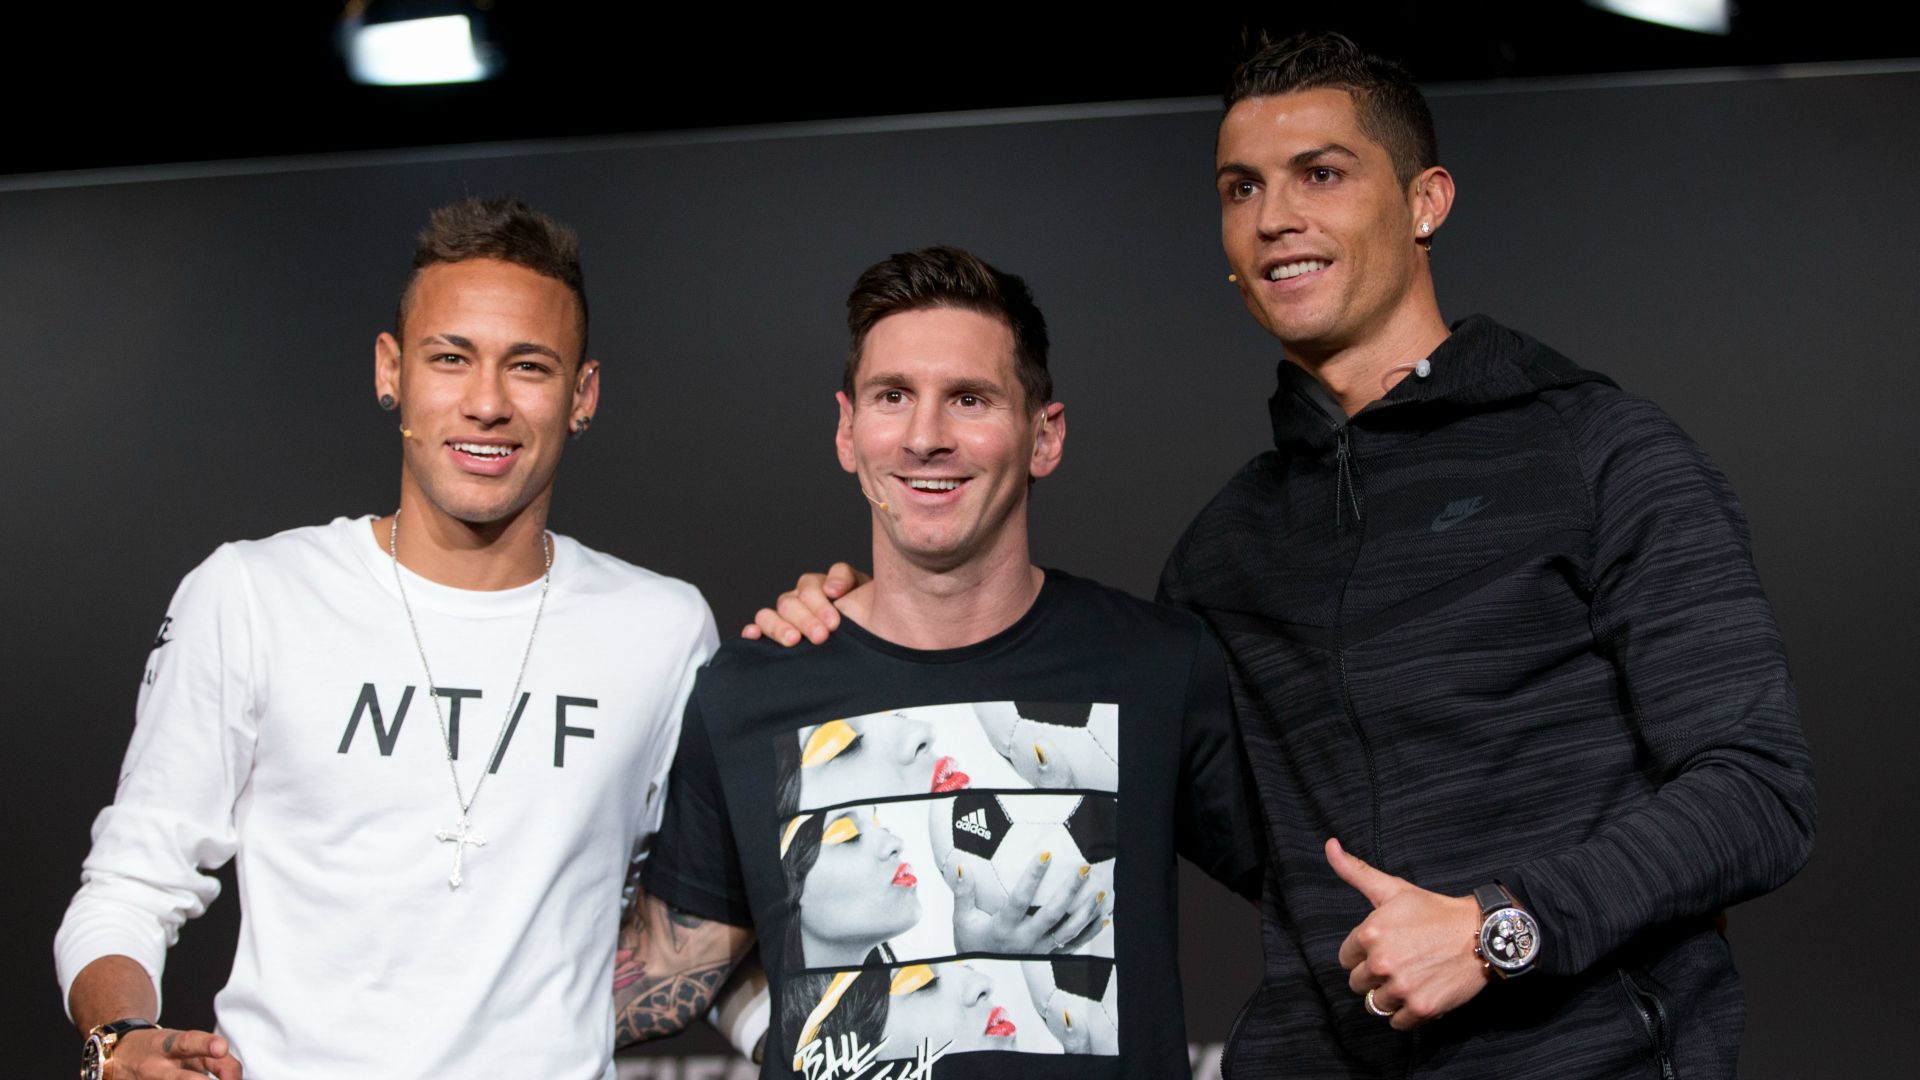 Ballon d'Or: Neymar will reach Messi and Ronaldo's level, says Brazil boss Tite